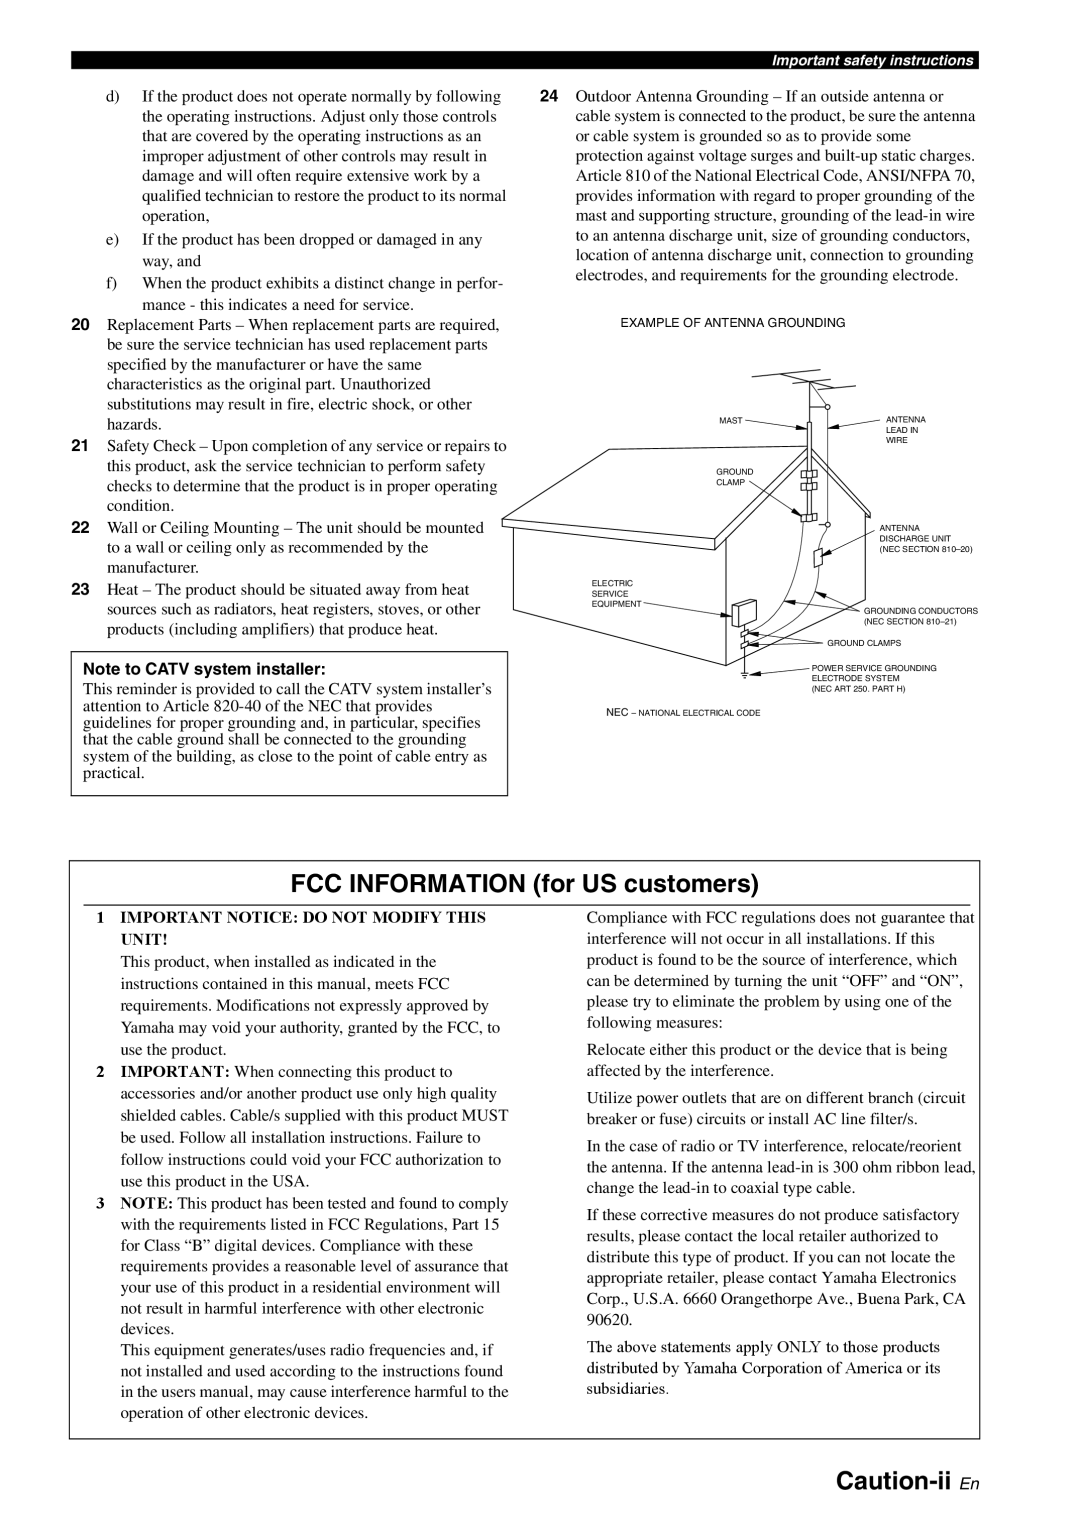 Yamaha RX-V561 owner manual FCC INFORMATION for US customers, Caution-ii En, Note to CATV system installer 